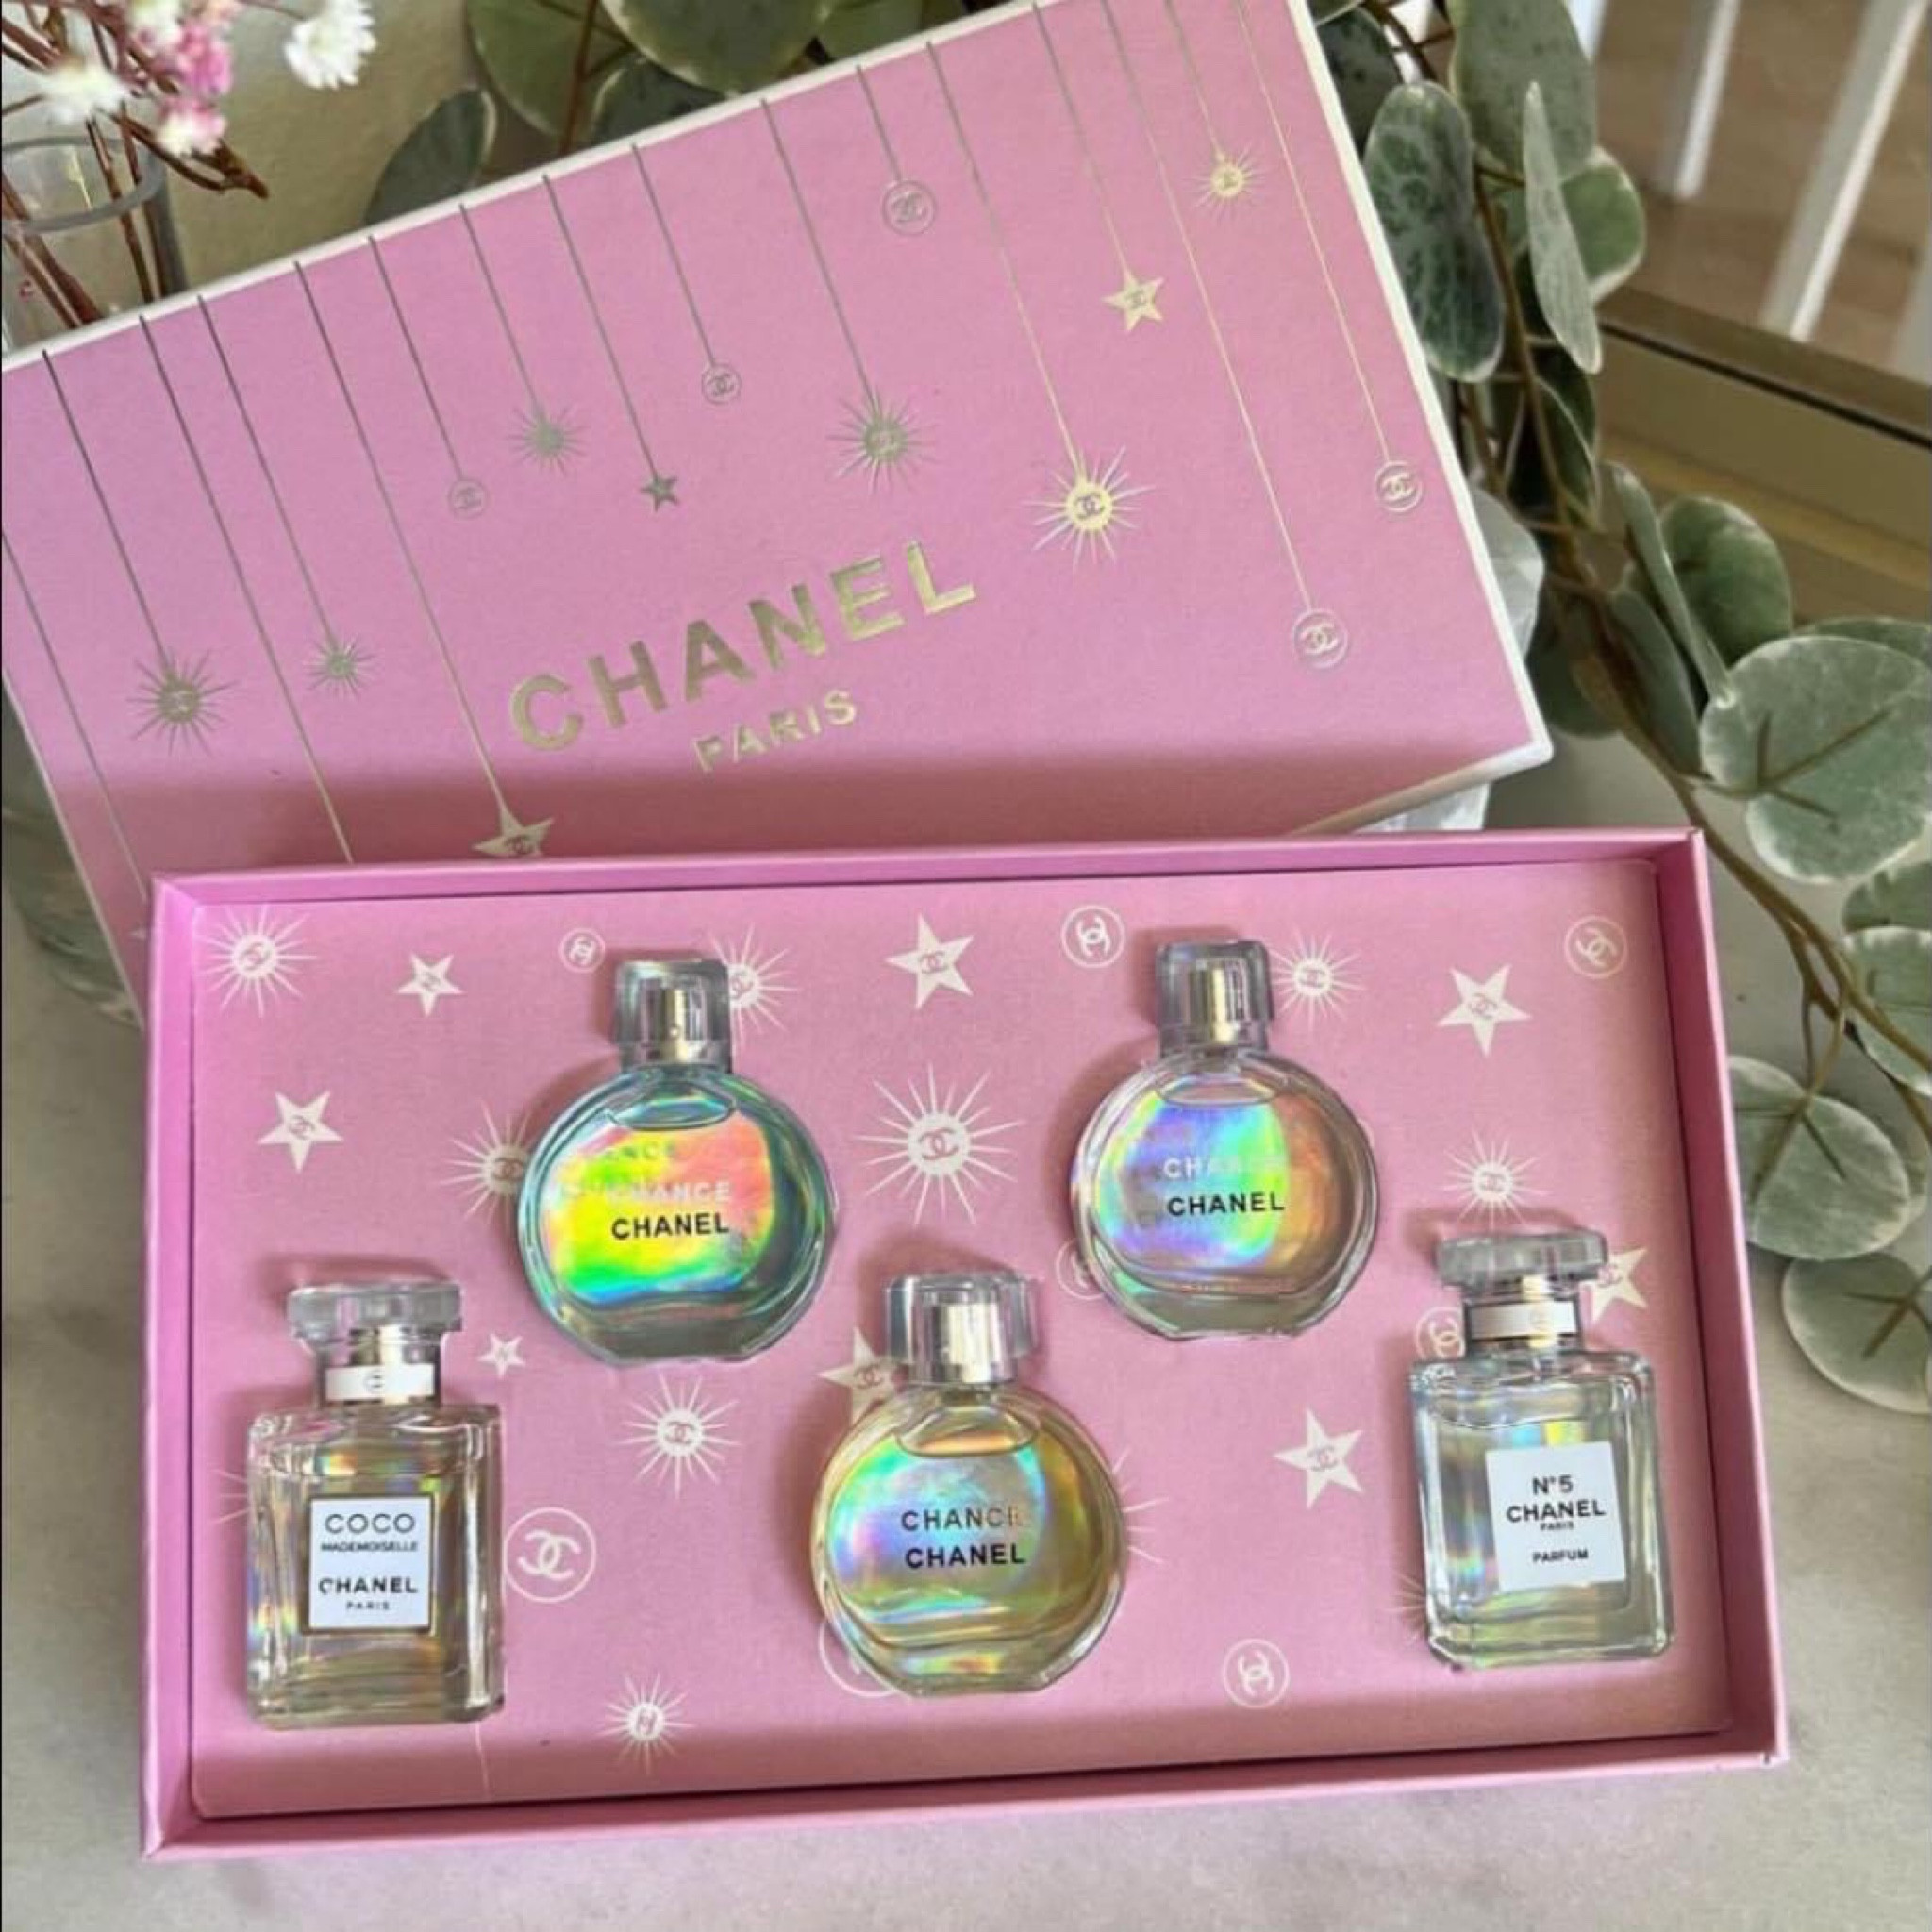 Chanel - Mini perfumes - Christmas #GiftGuide